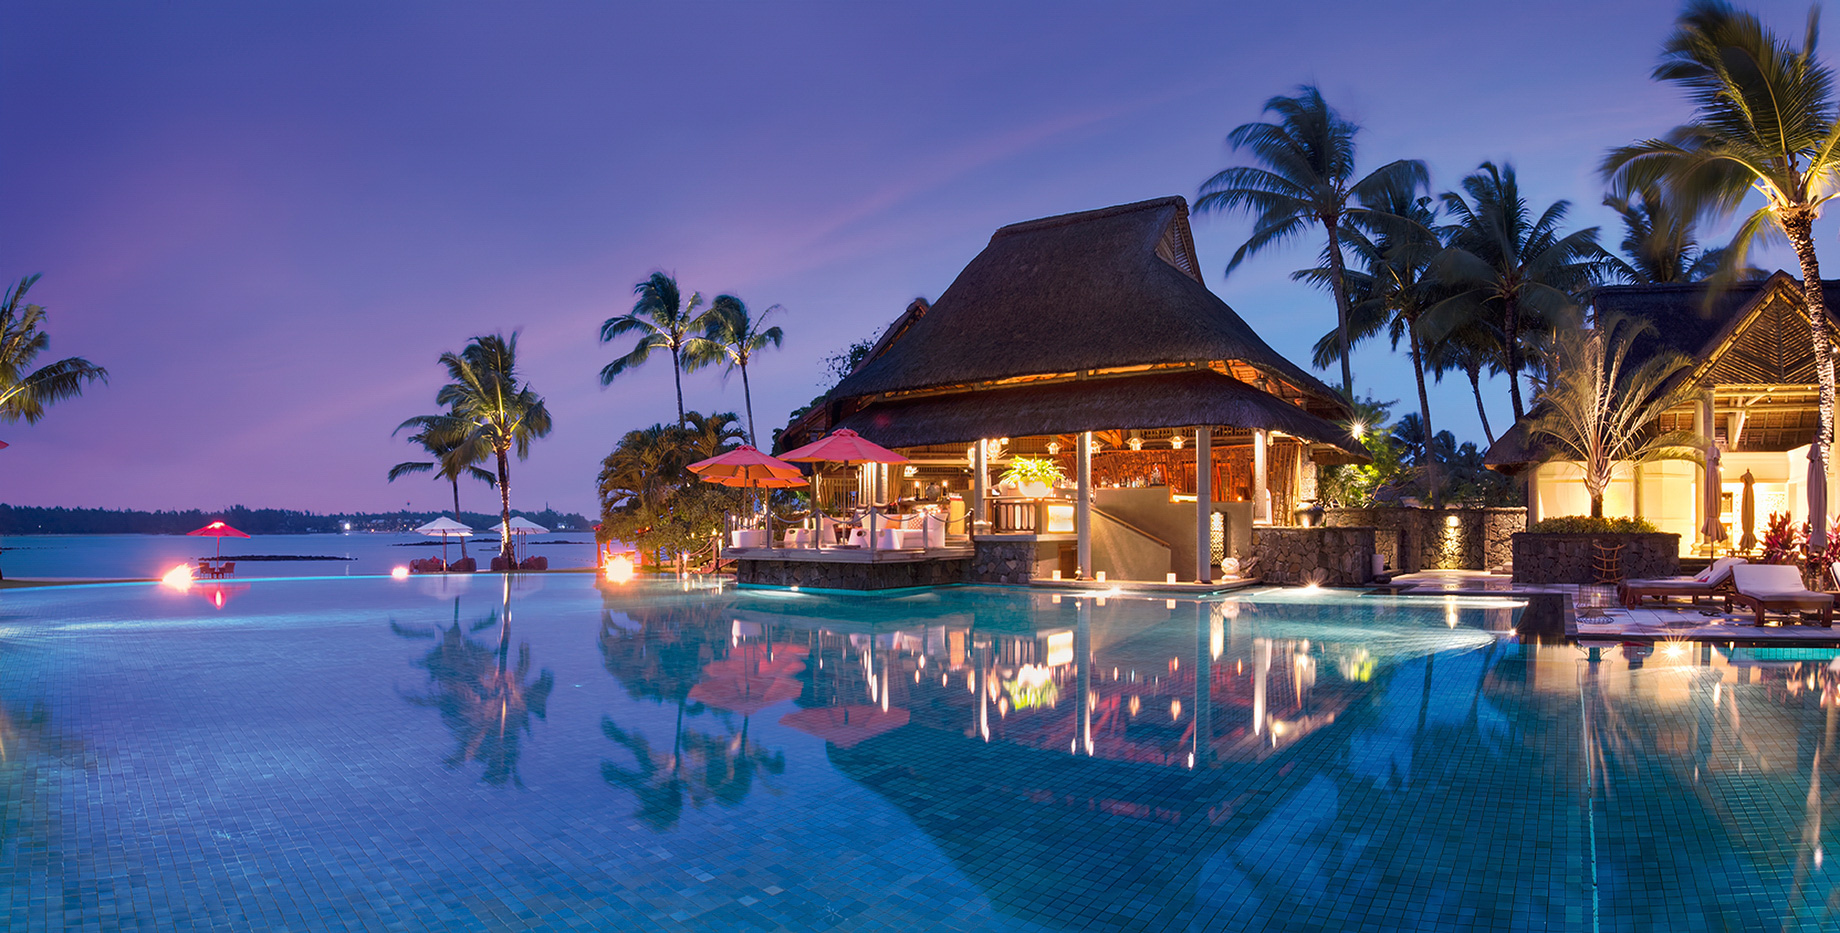 Constance Prince Maurice Resort – Mauritius – Exterior Pool Night